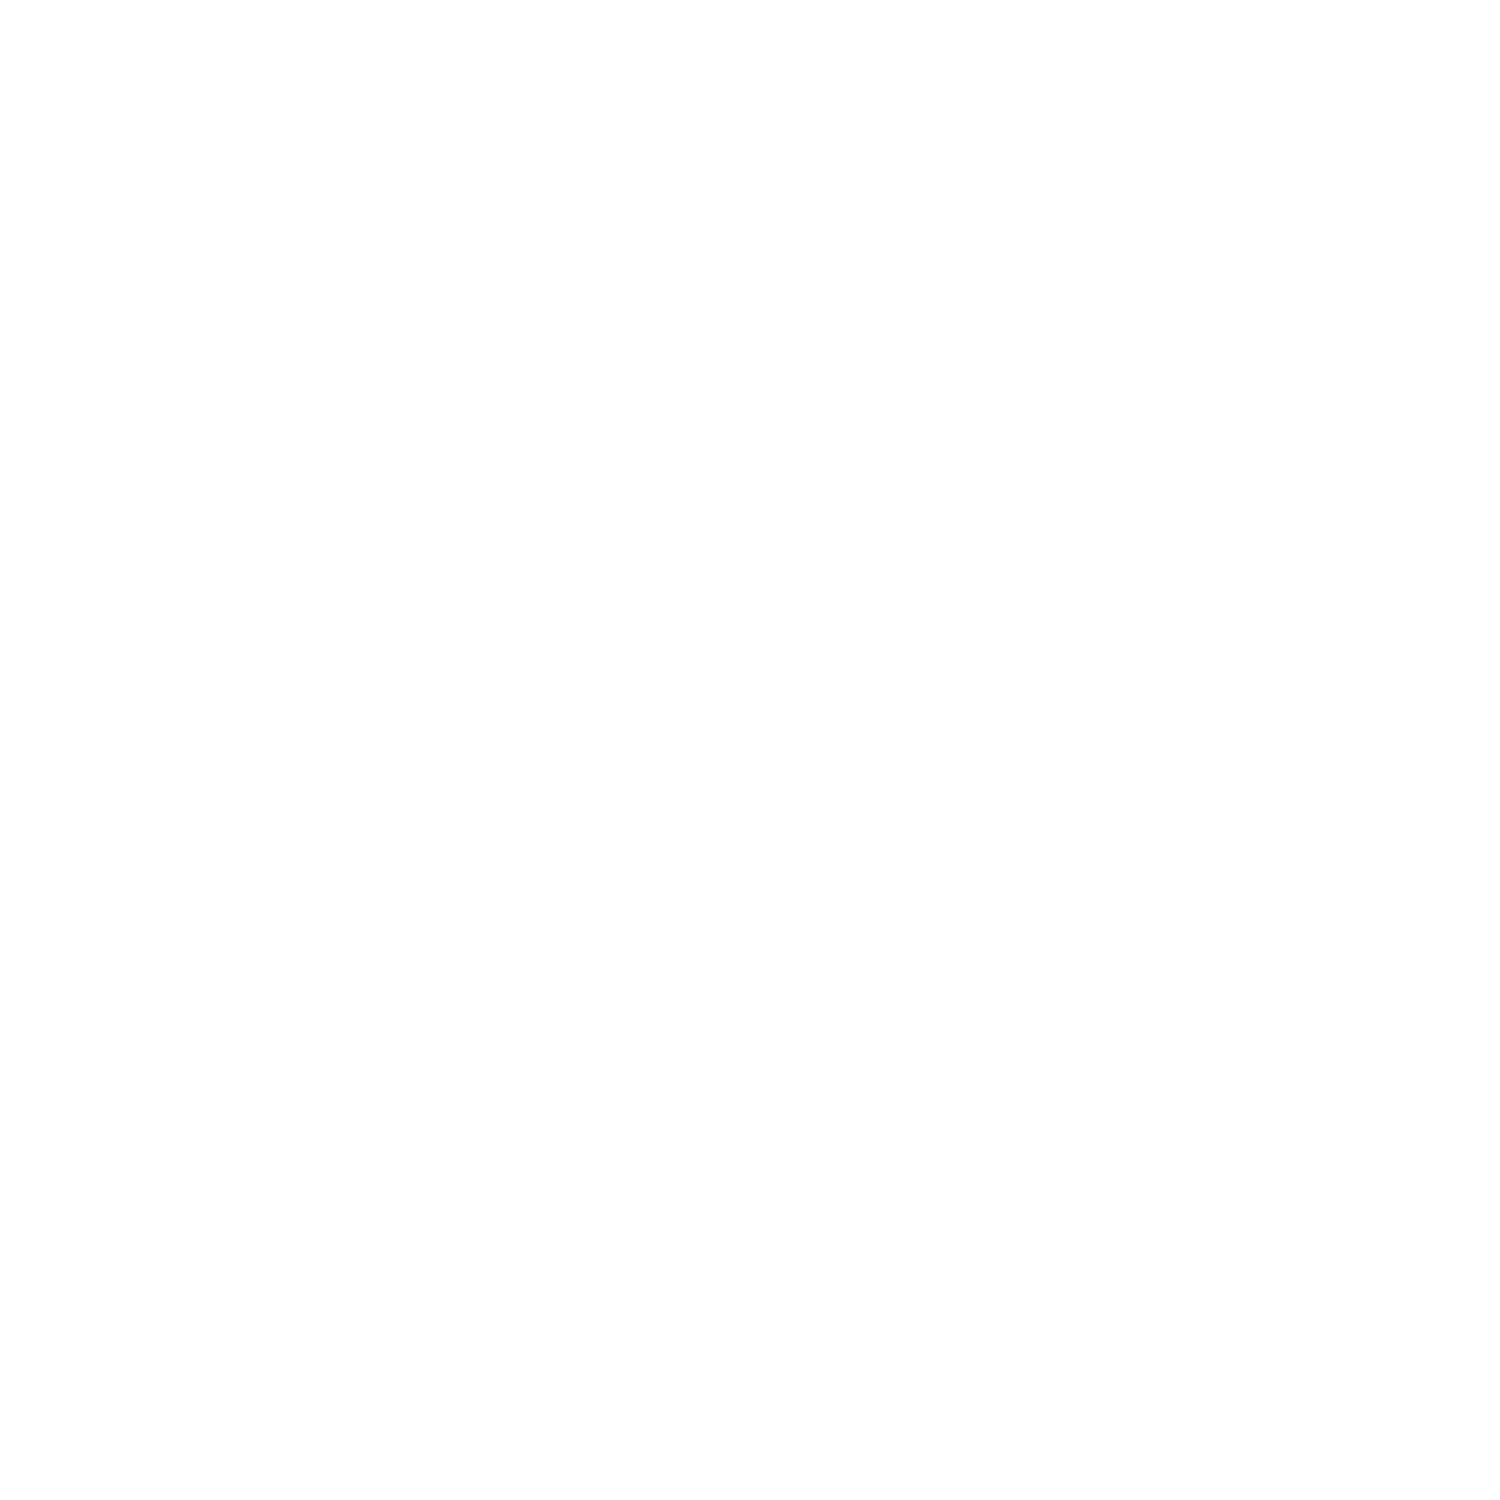 Smart Printworks